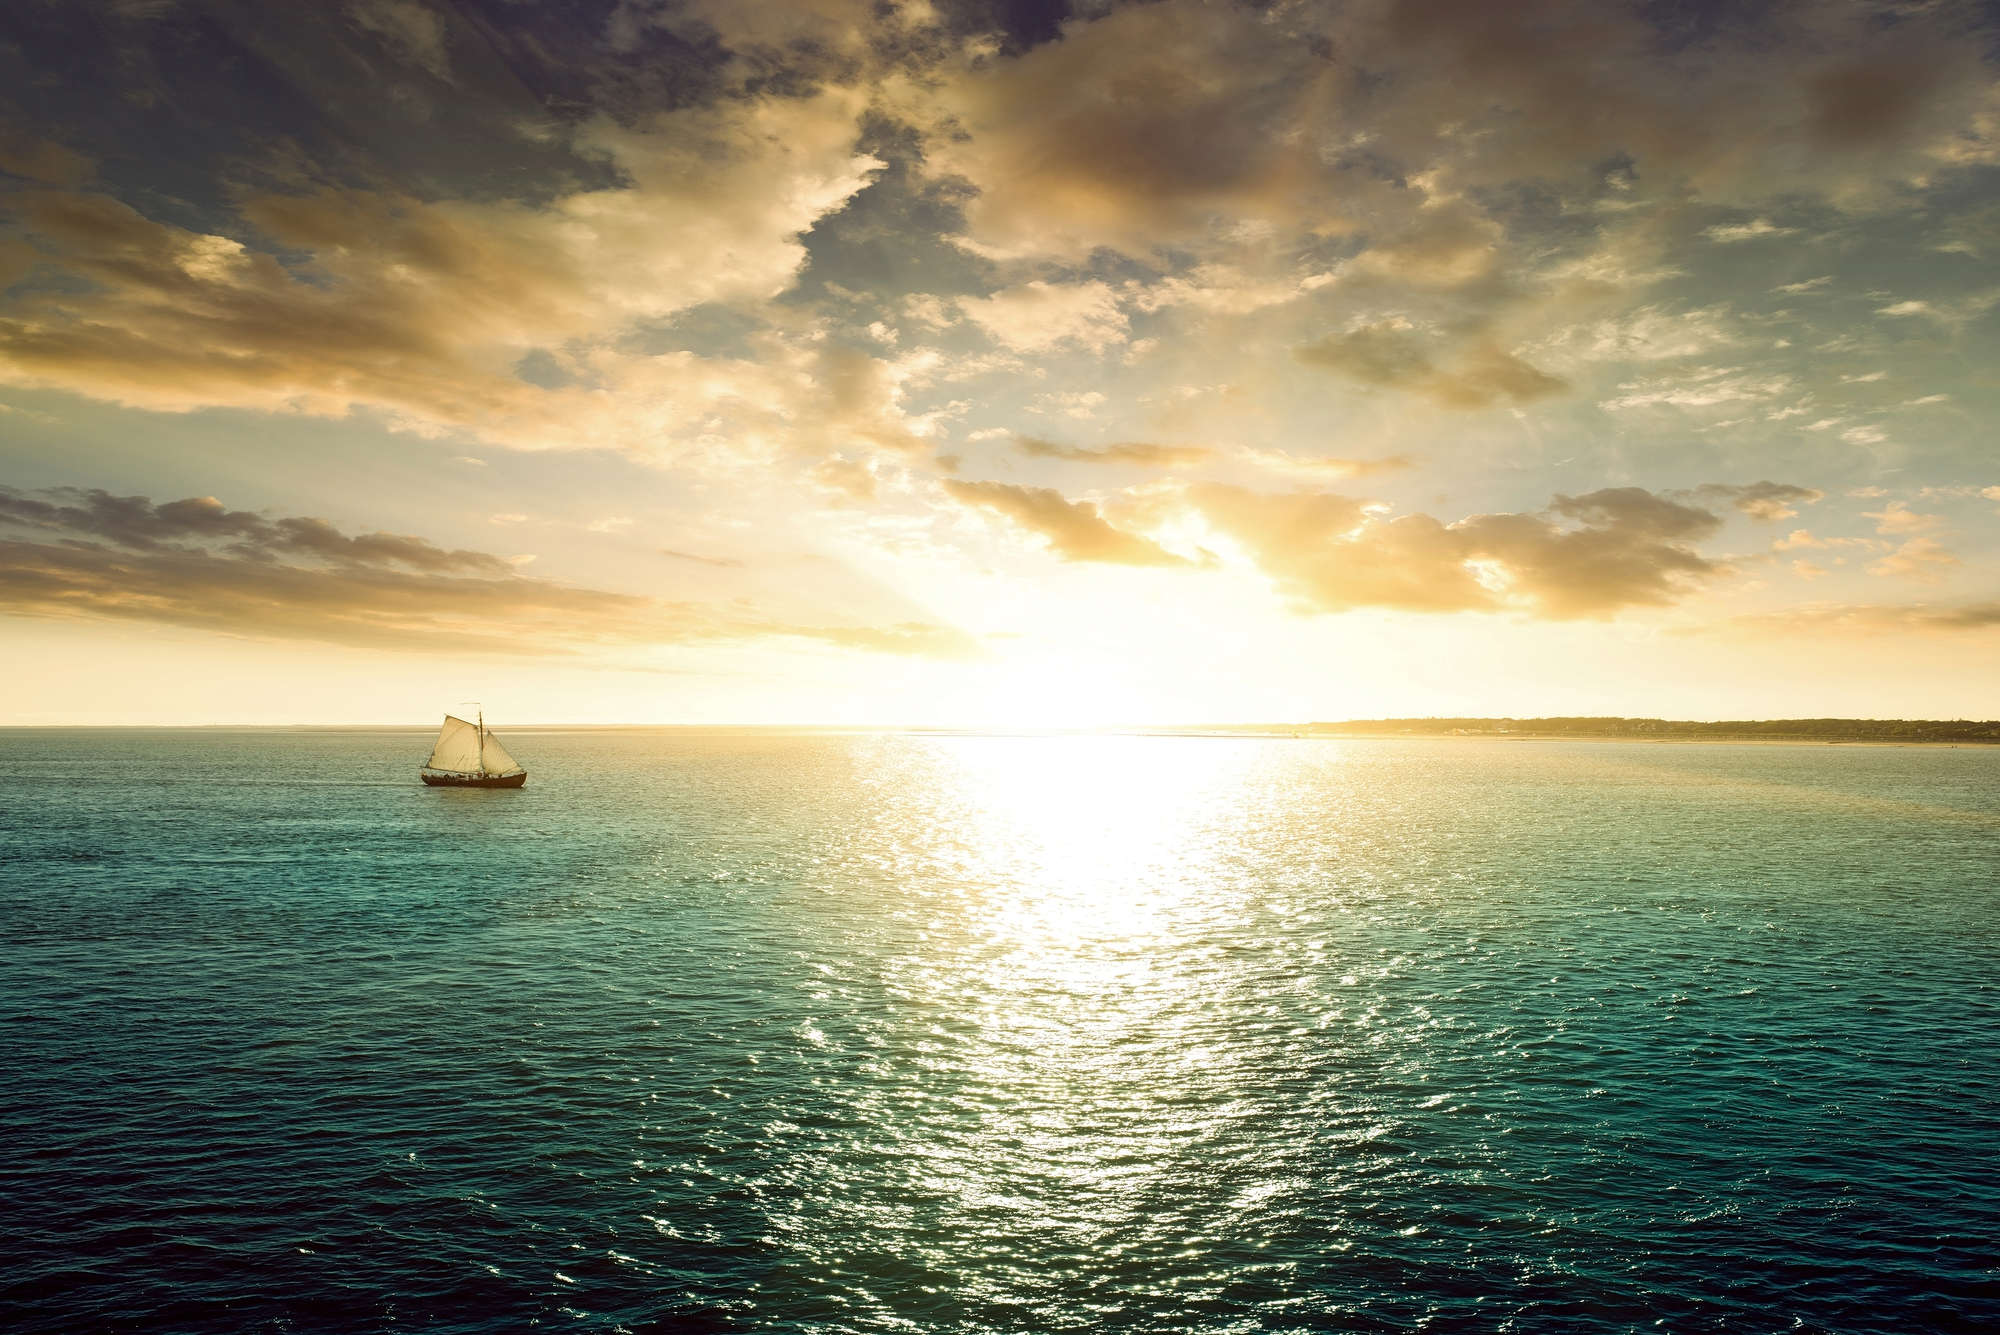             Meer Fototapete Segelboot bei Sonnenuntergang auf Matt Glattvlies
        